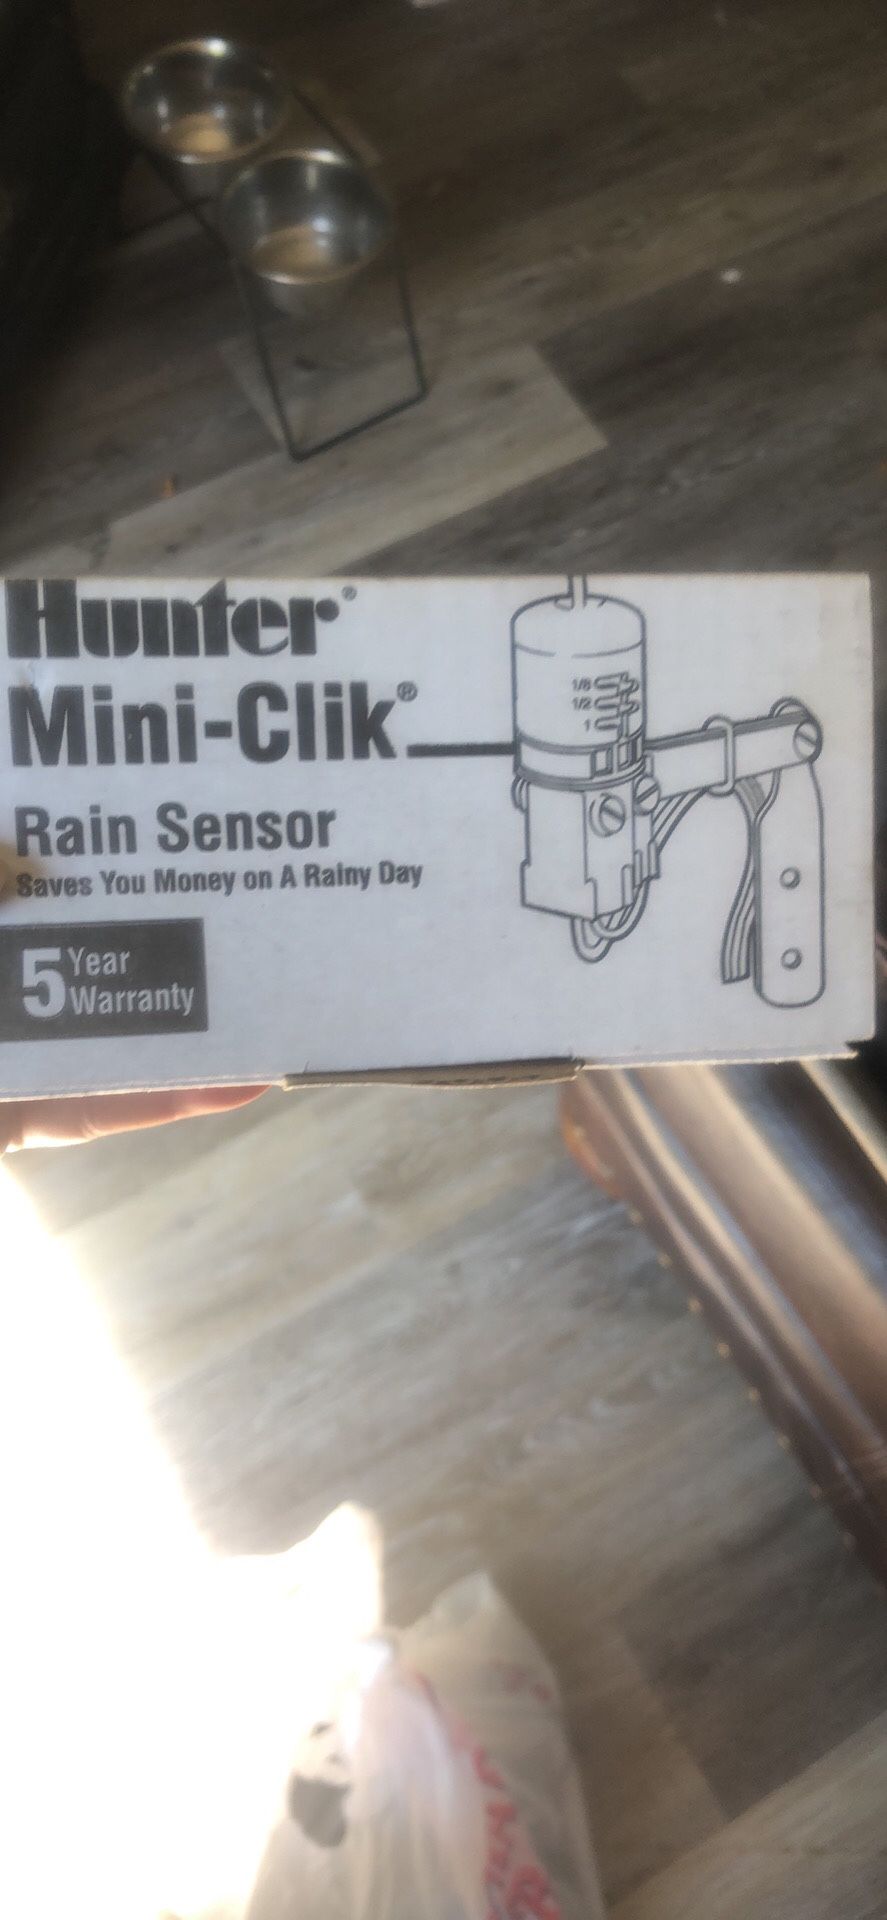 Rain sensor for sprinkler system brand new in box with directions